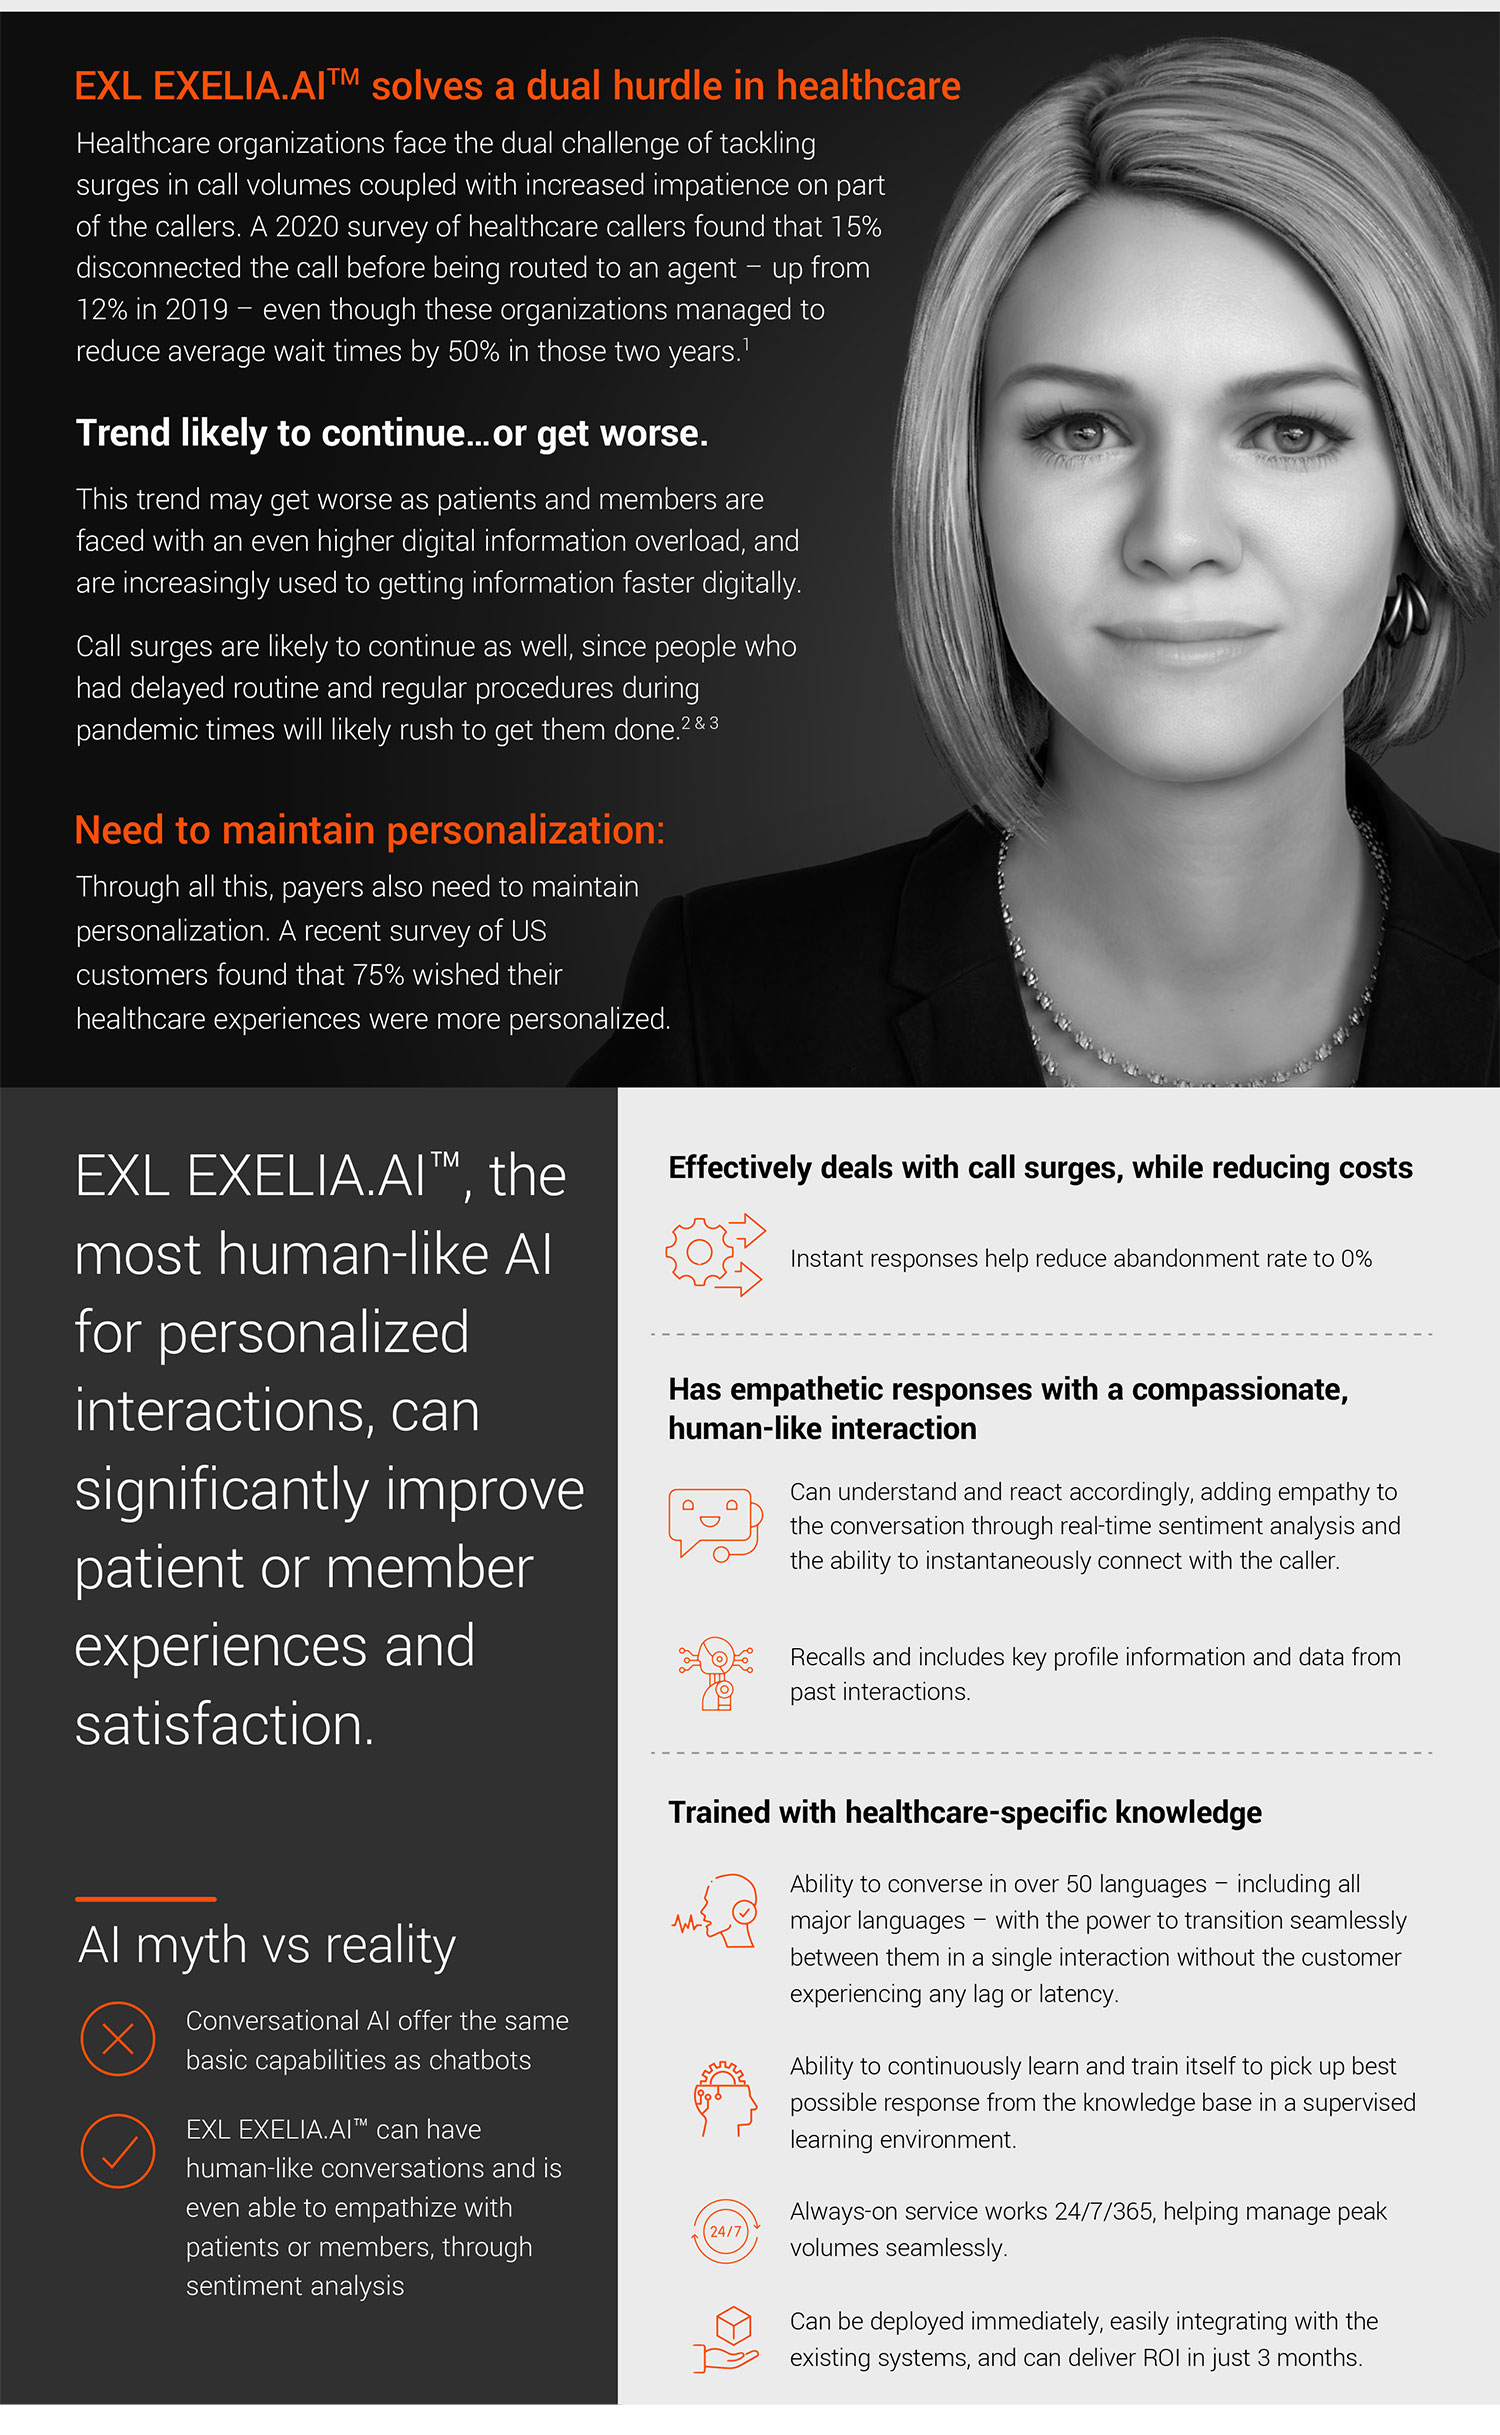 EXL EXELIA.AI solves a dual hurdle in healthcare